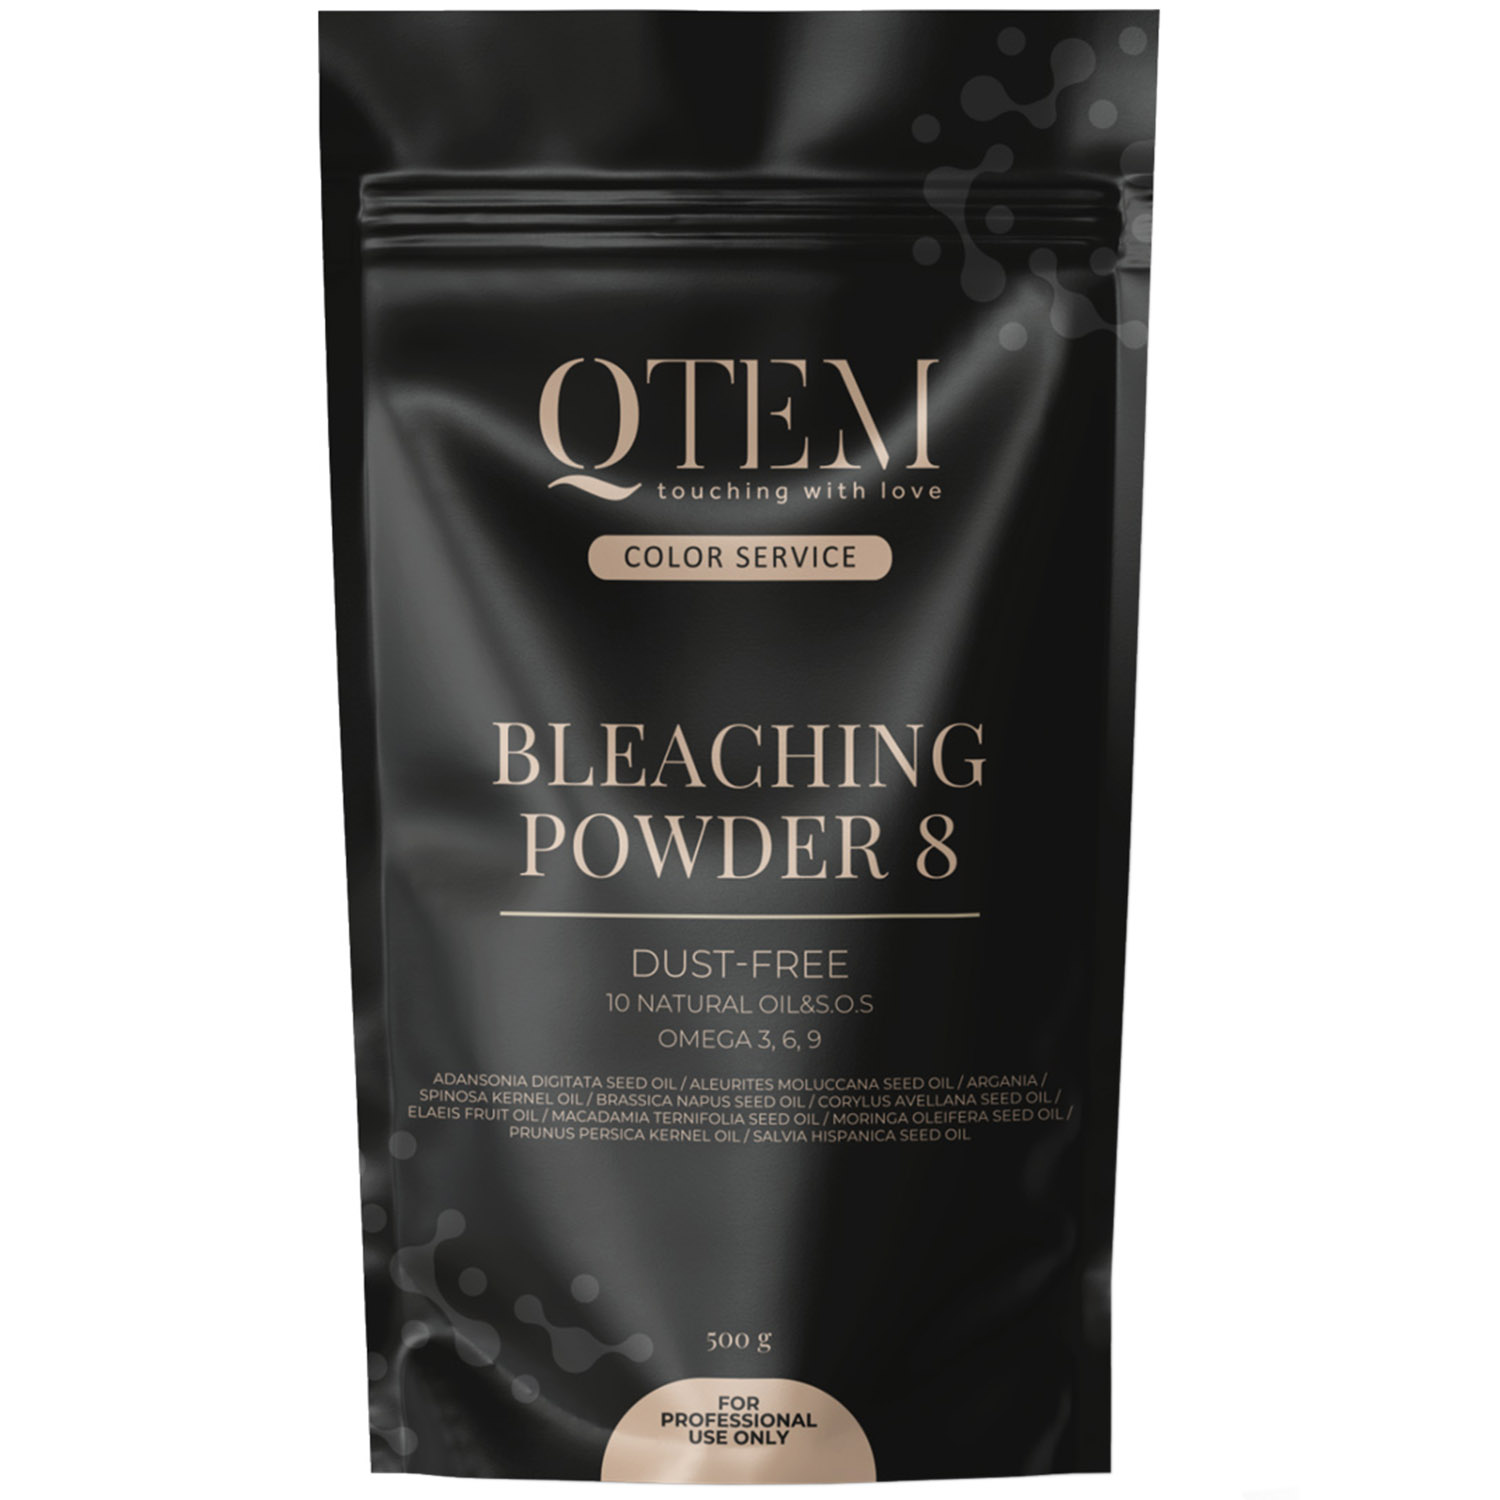 Qtem Обесцвечивающий порошок Bleaching Powder 8, 500 г (Qtem, Color Service) фото